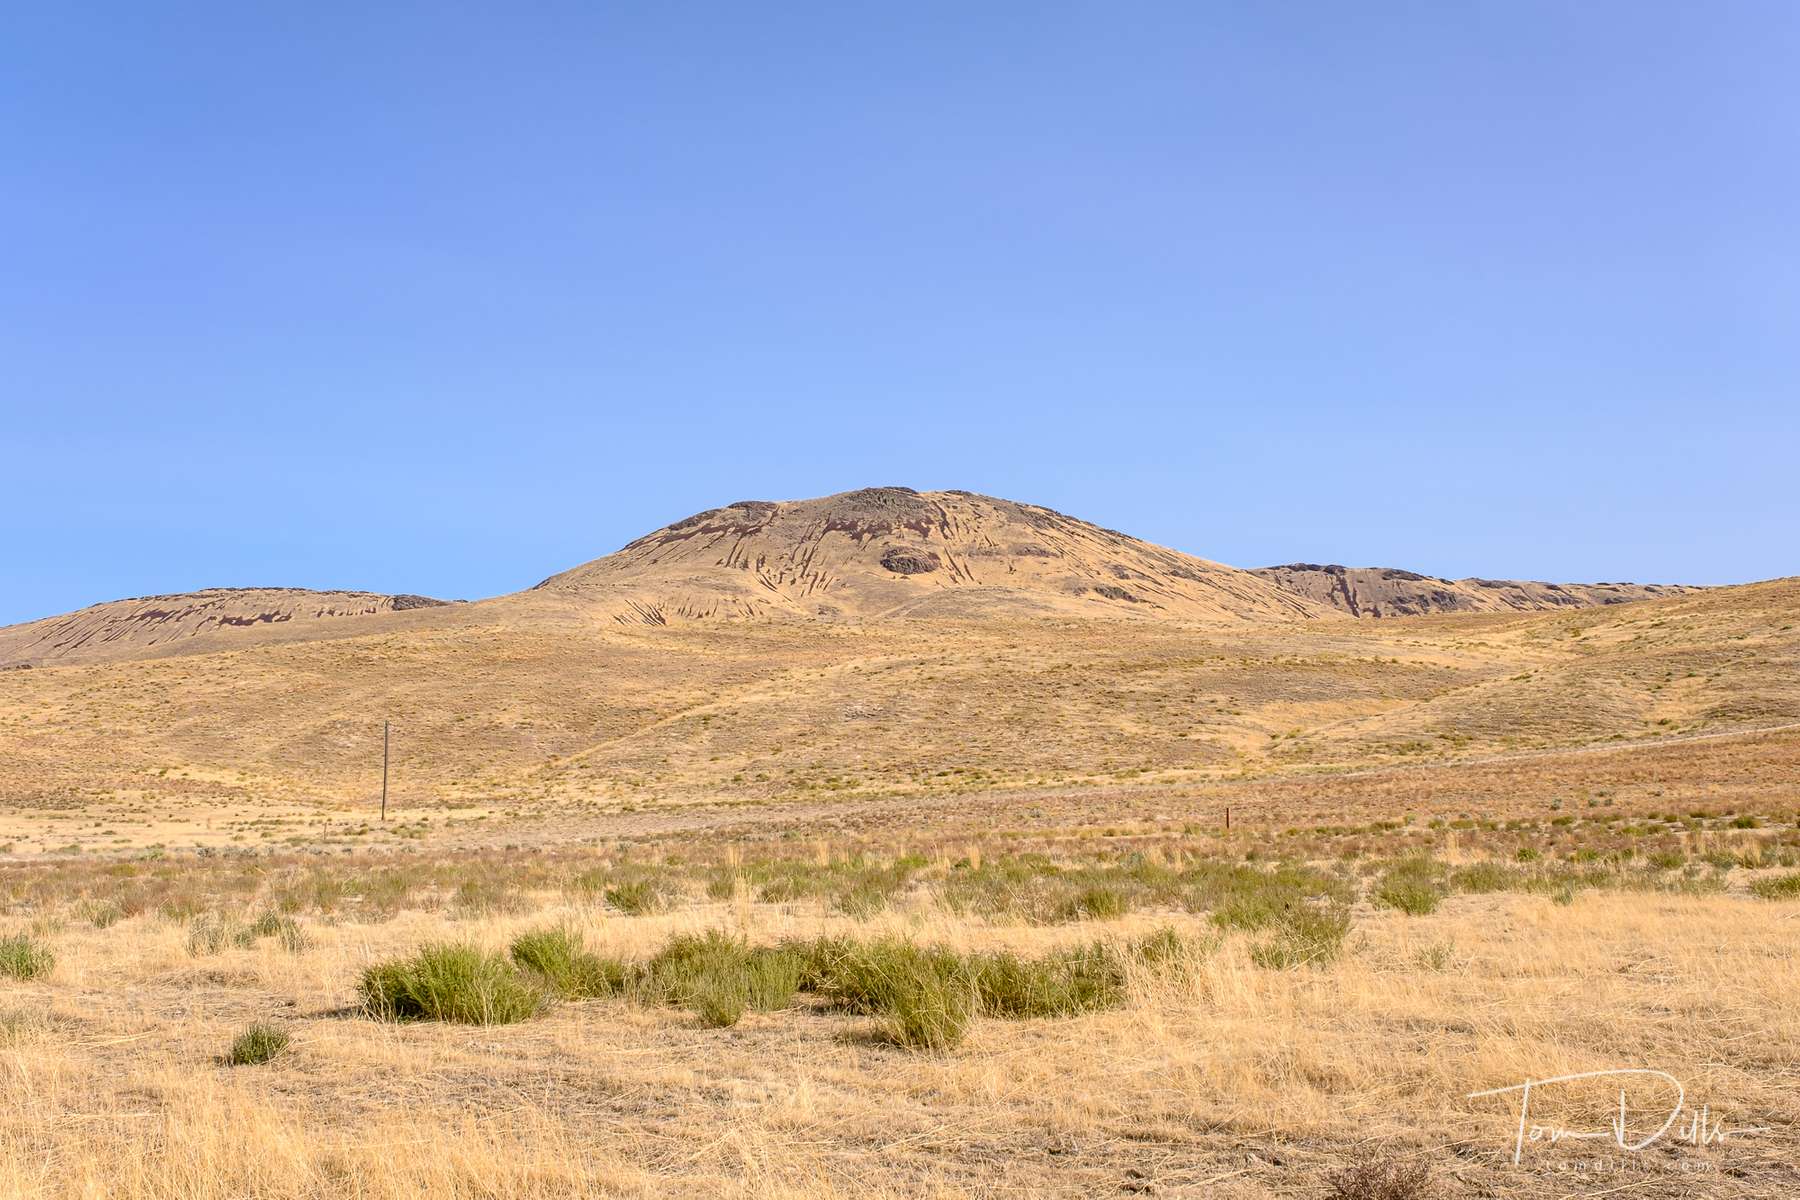 Scenery along I-80 near Battle Mountain, Nevada